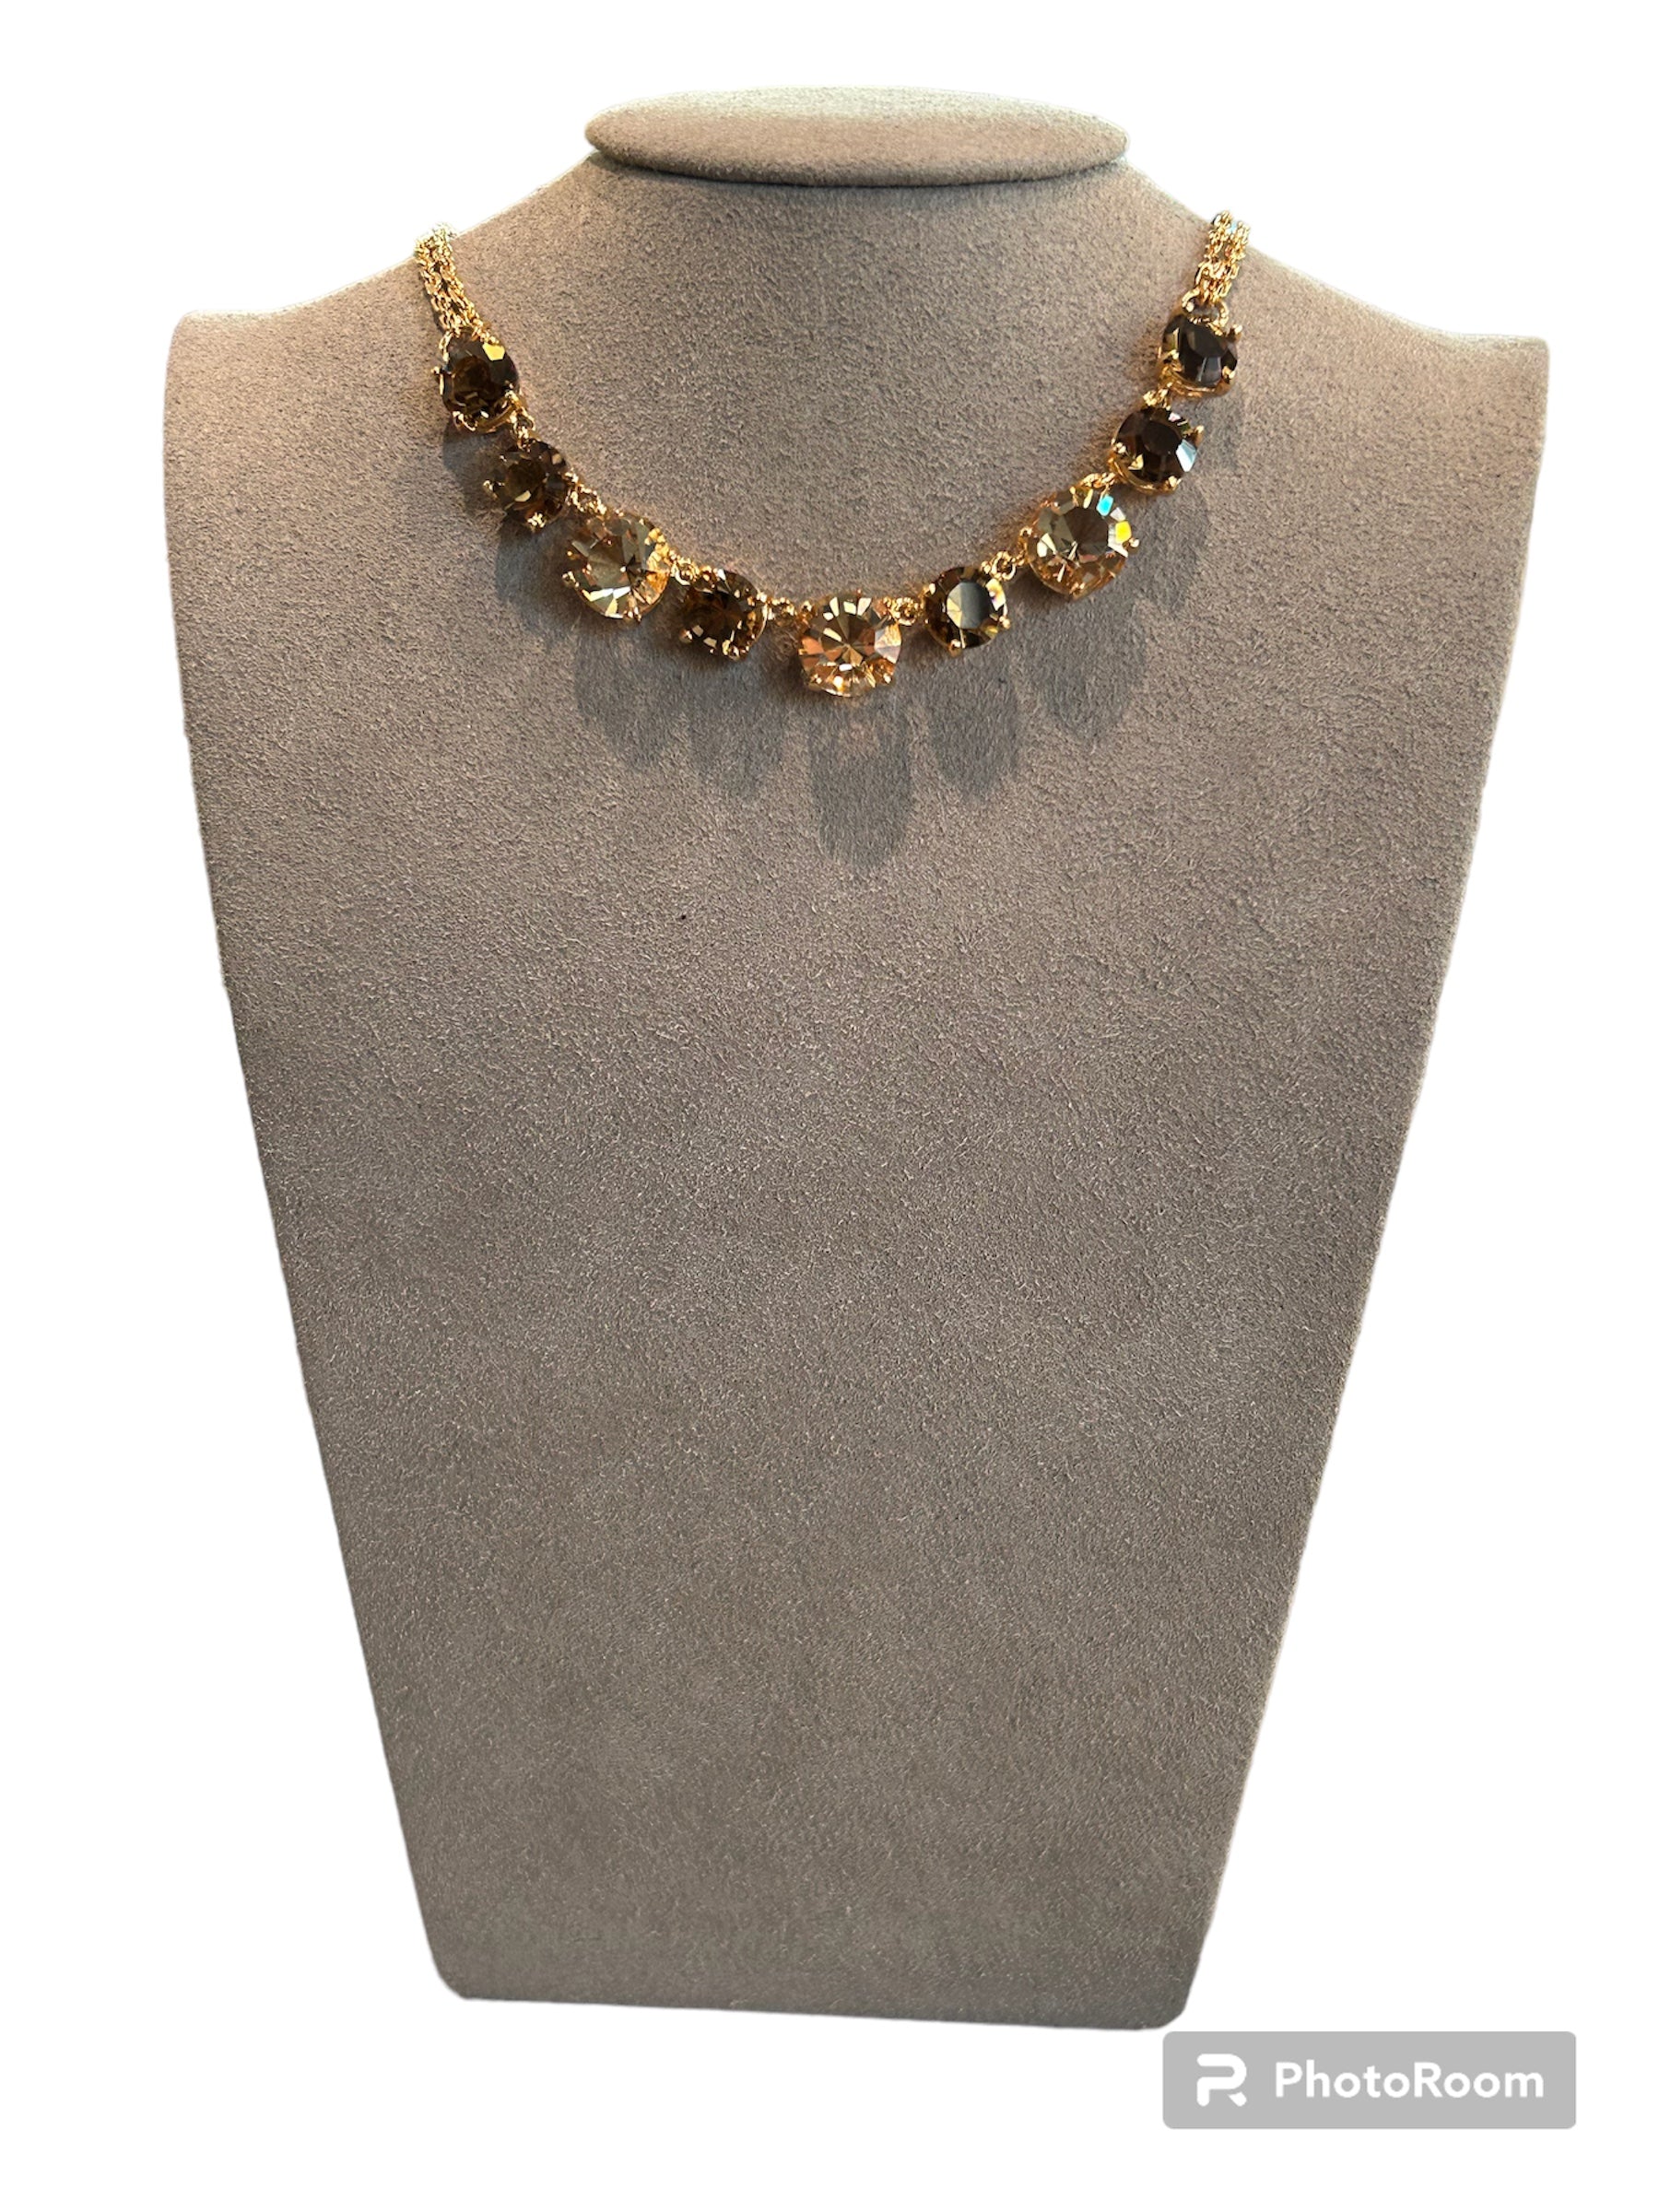 IL Mio Re - Gilt bronze necklace with smoky stones - ILMIORE CL 024